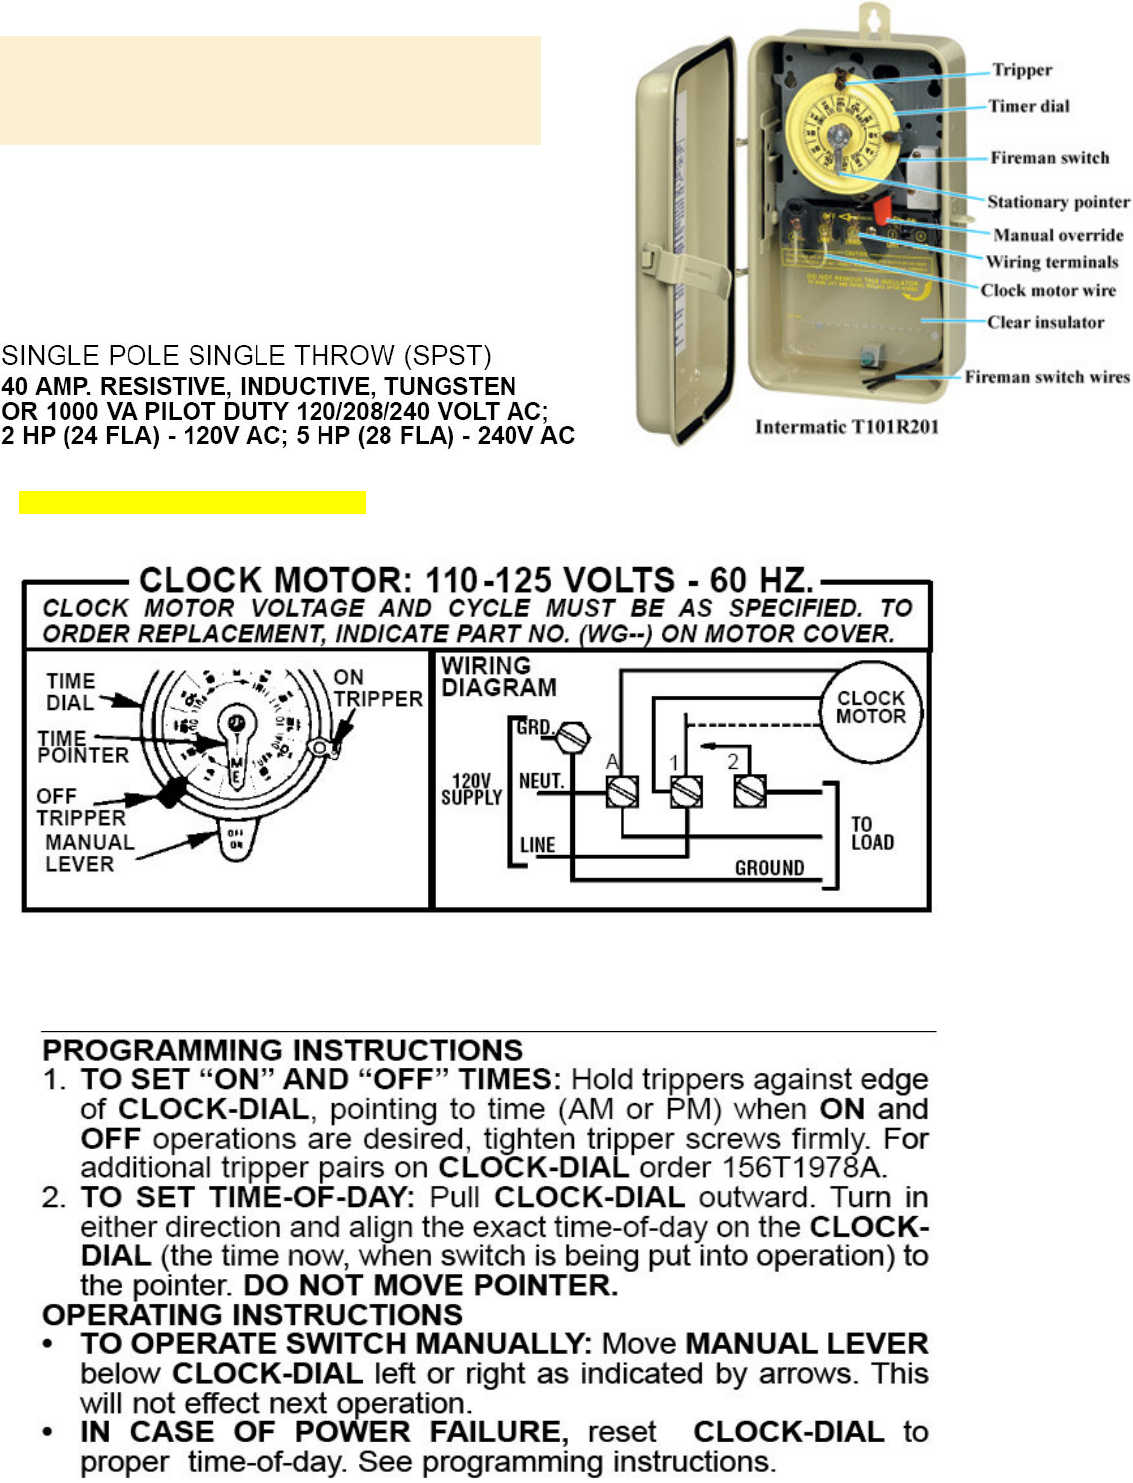 Intermatic T101p201 Instruction Manual